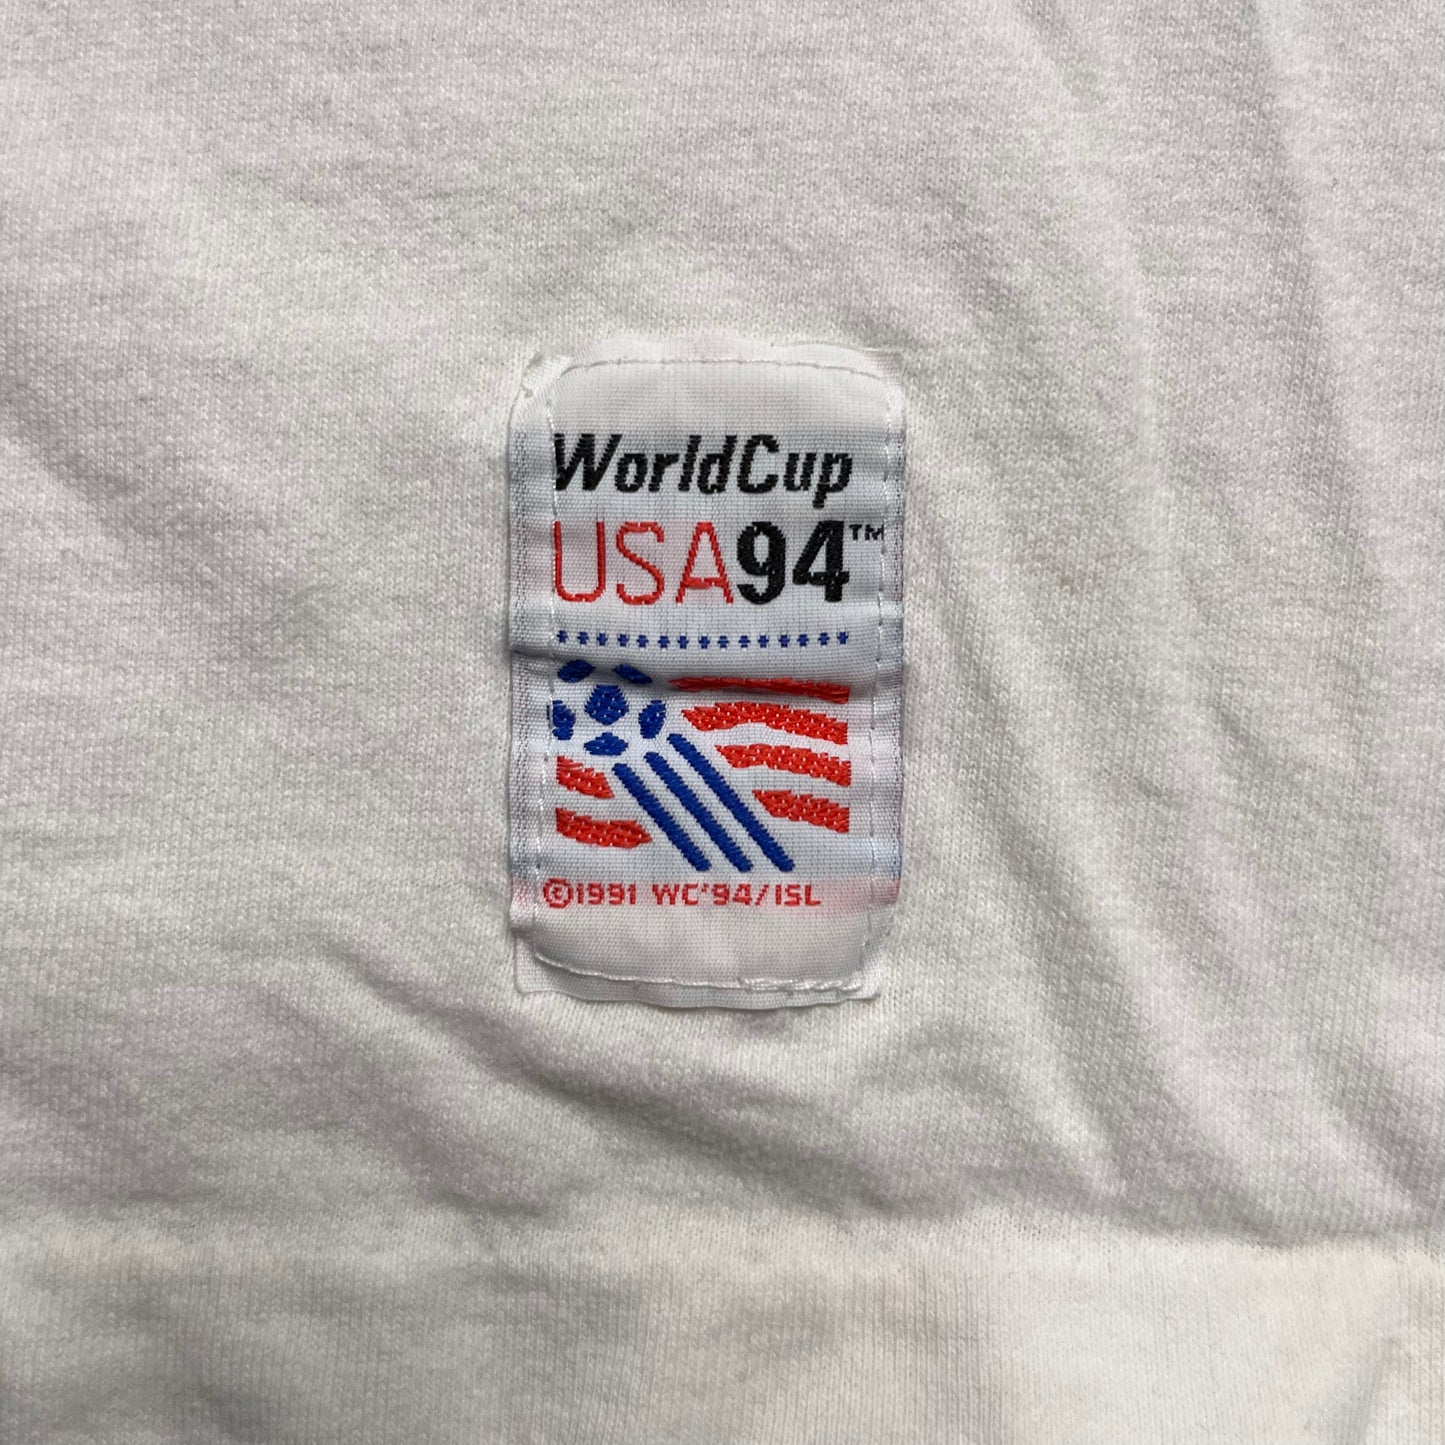 1994 Adidas World Cup Tee (L)